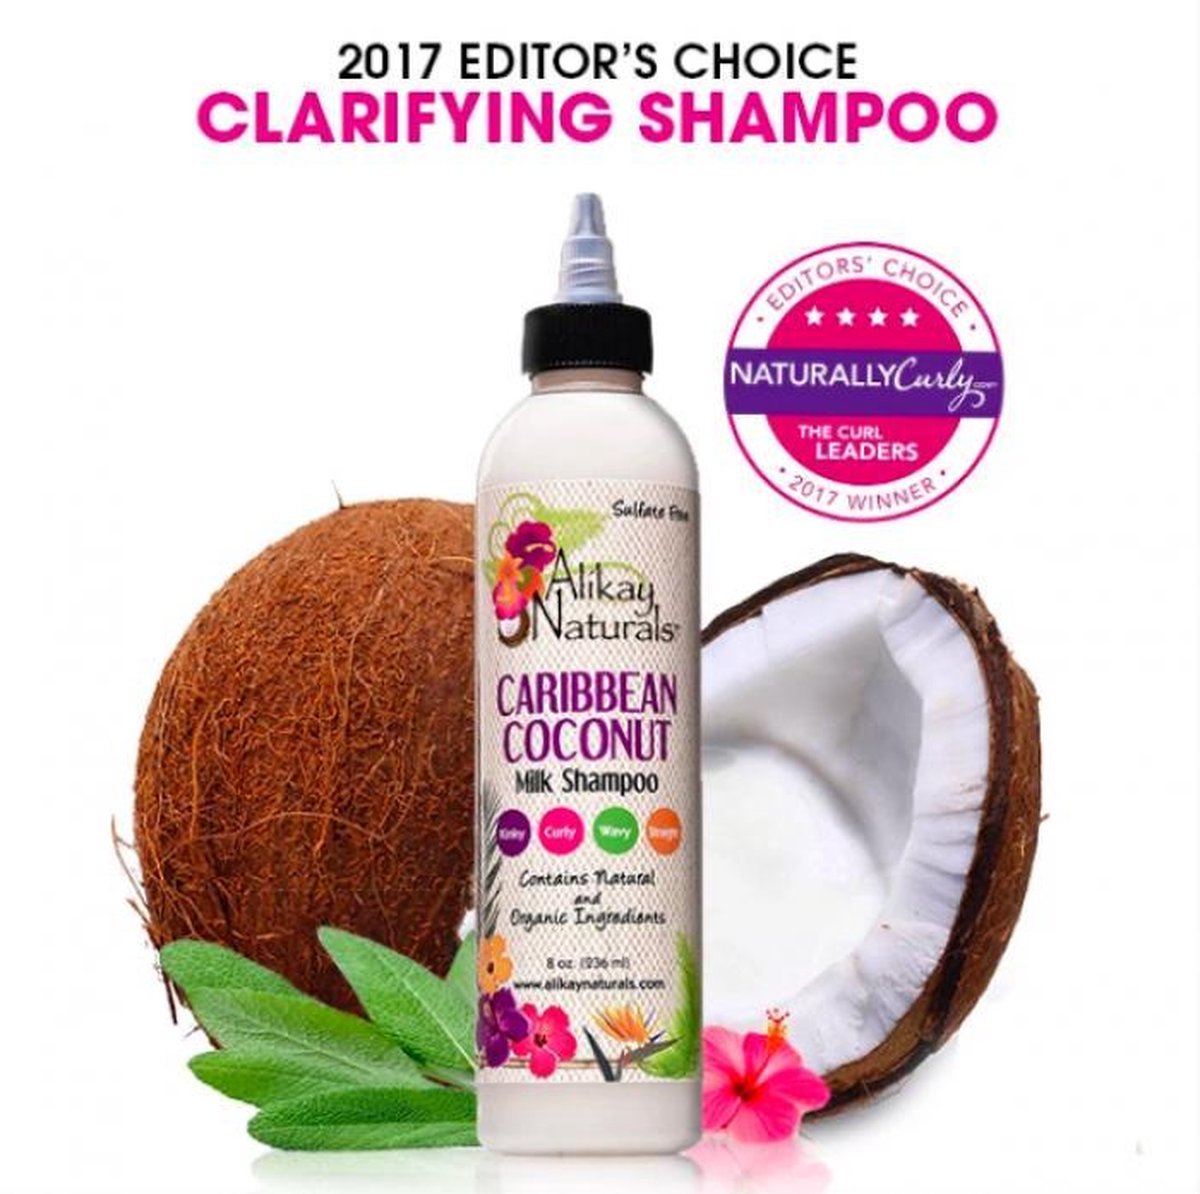 Alikay Naturals Carribean Coconut Milk Shampoo 236ml